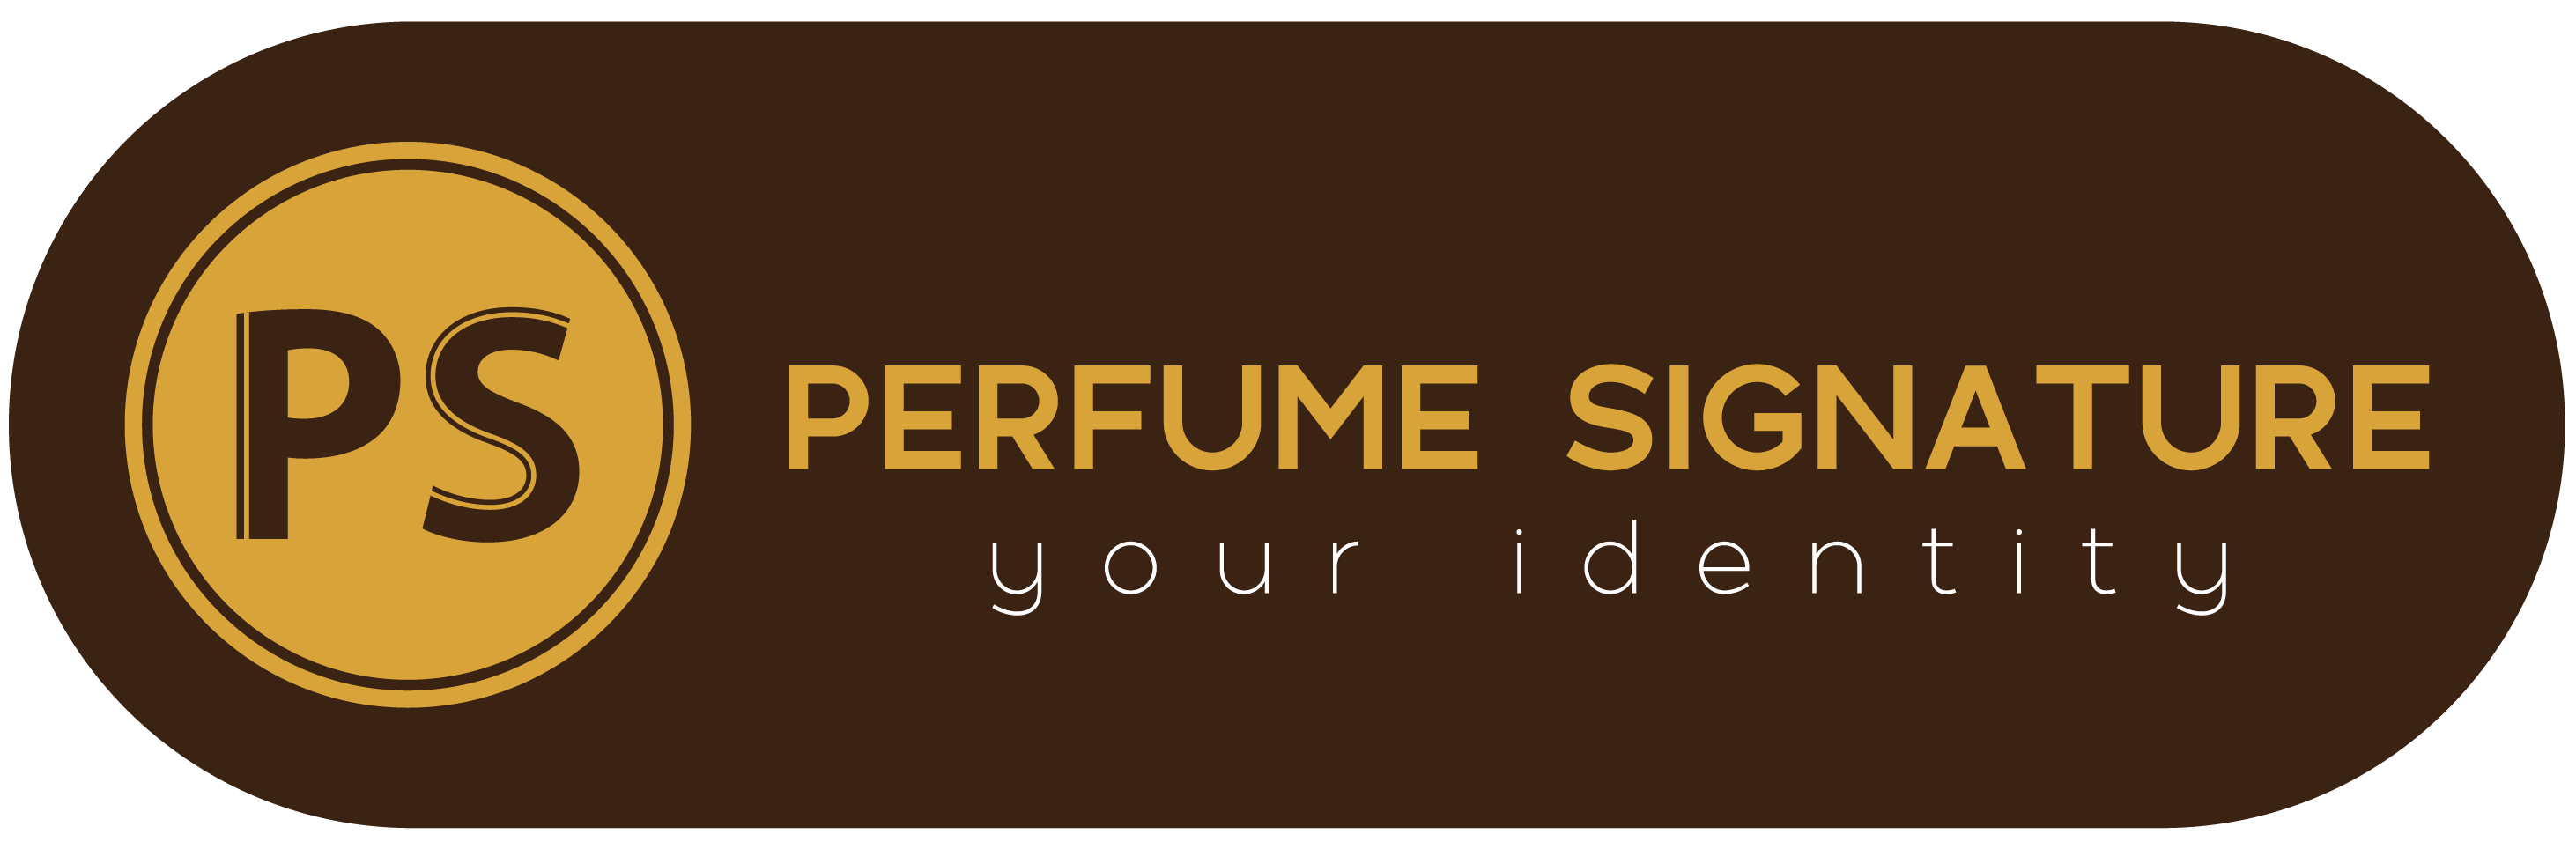 Perfume Signature